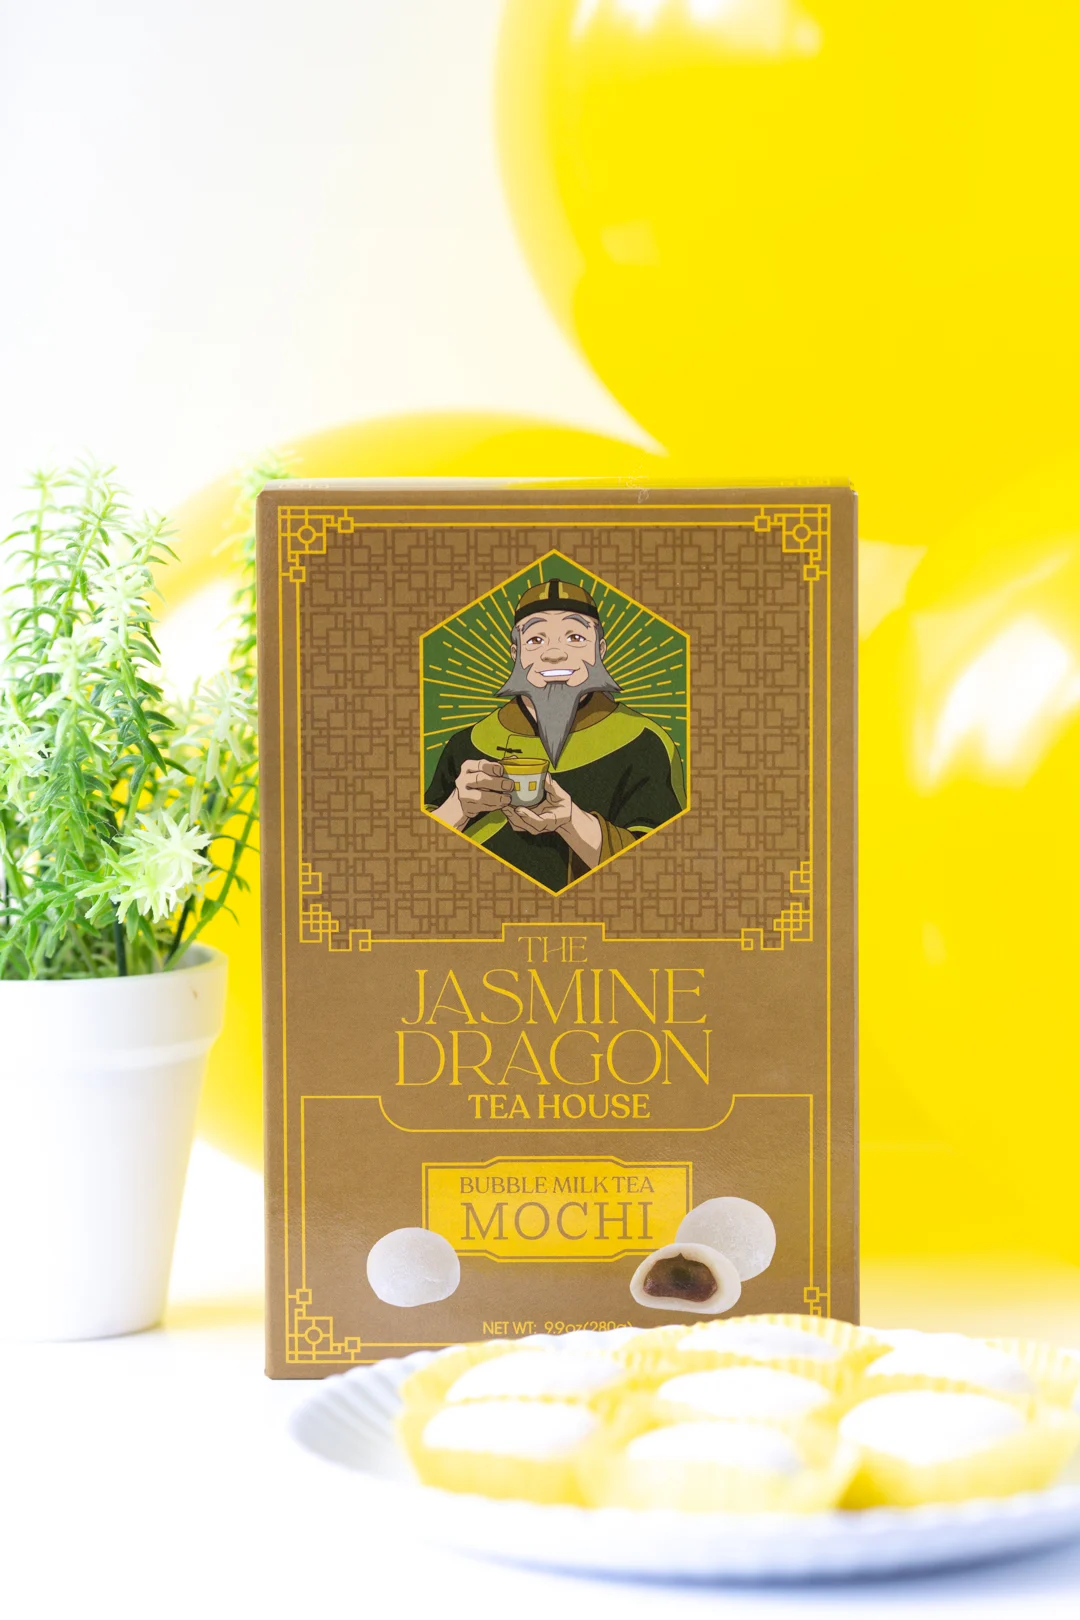 Iroh's The Jasmine Dragon Tea House Bubble Milk Tea Mochi packaging available at FYE